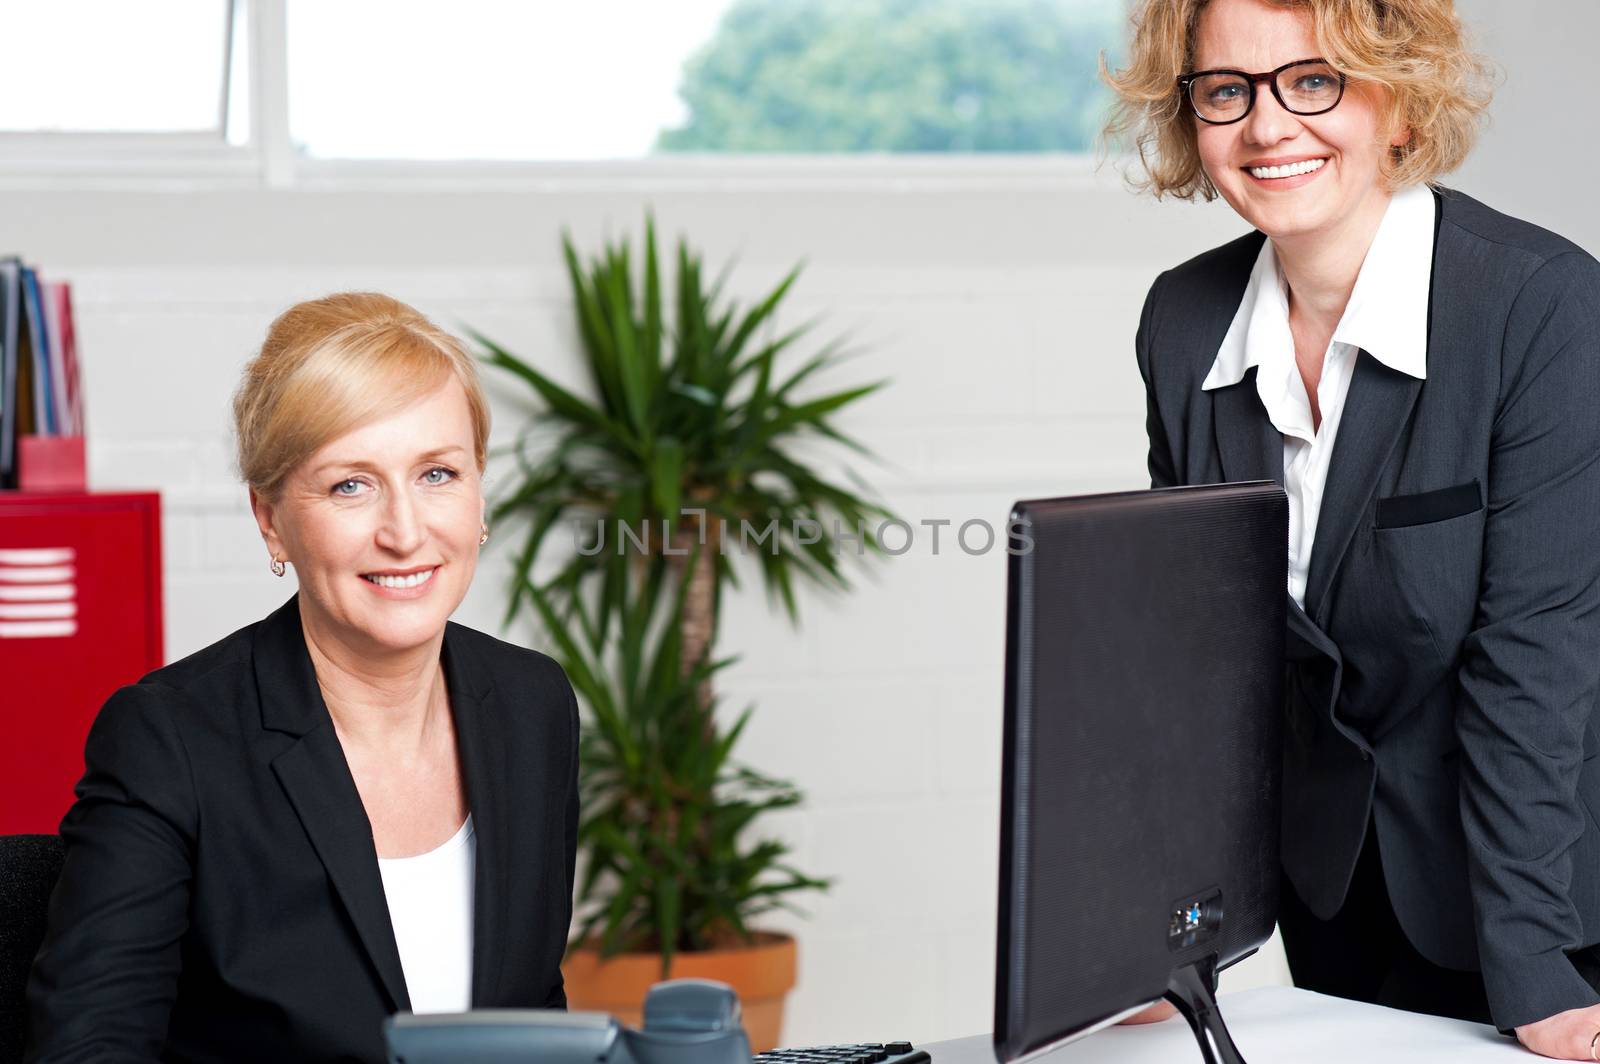 Joyful businesswomen enjoying at work desk